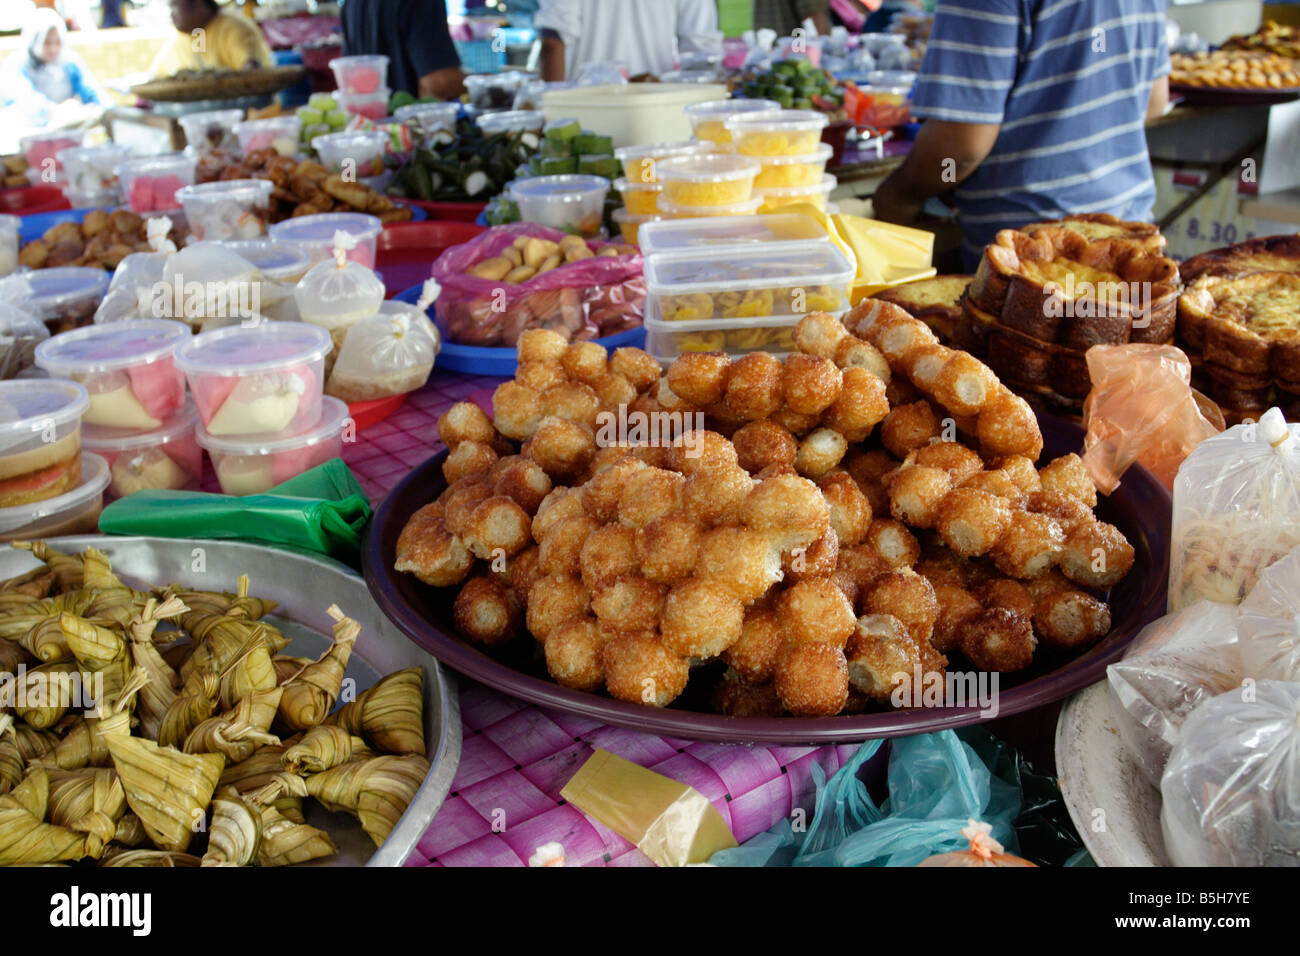 Comida tradicional malaya en un mercado durante el mes de Ramadán en Terengganu, en Malasia. Foto de stock